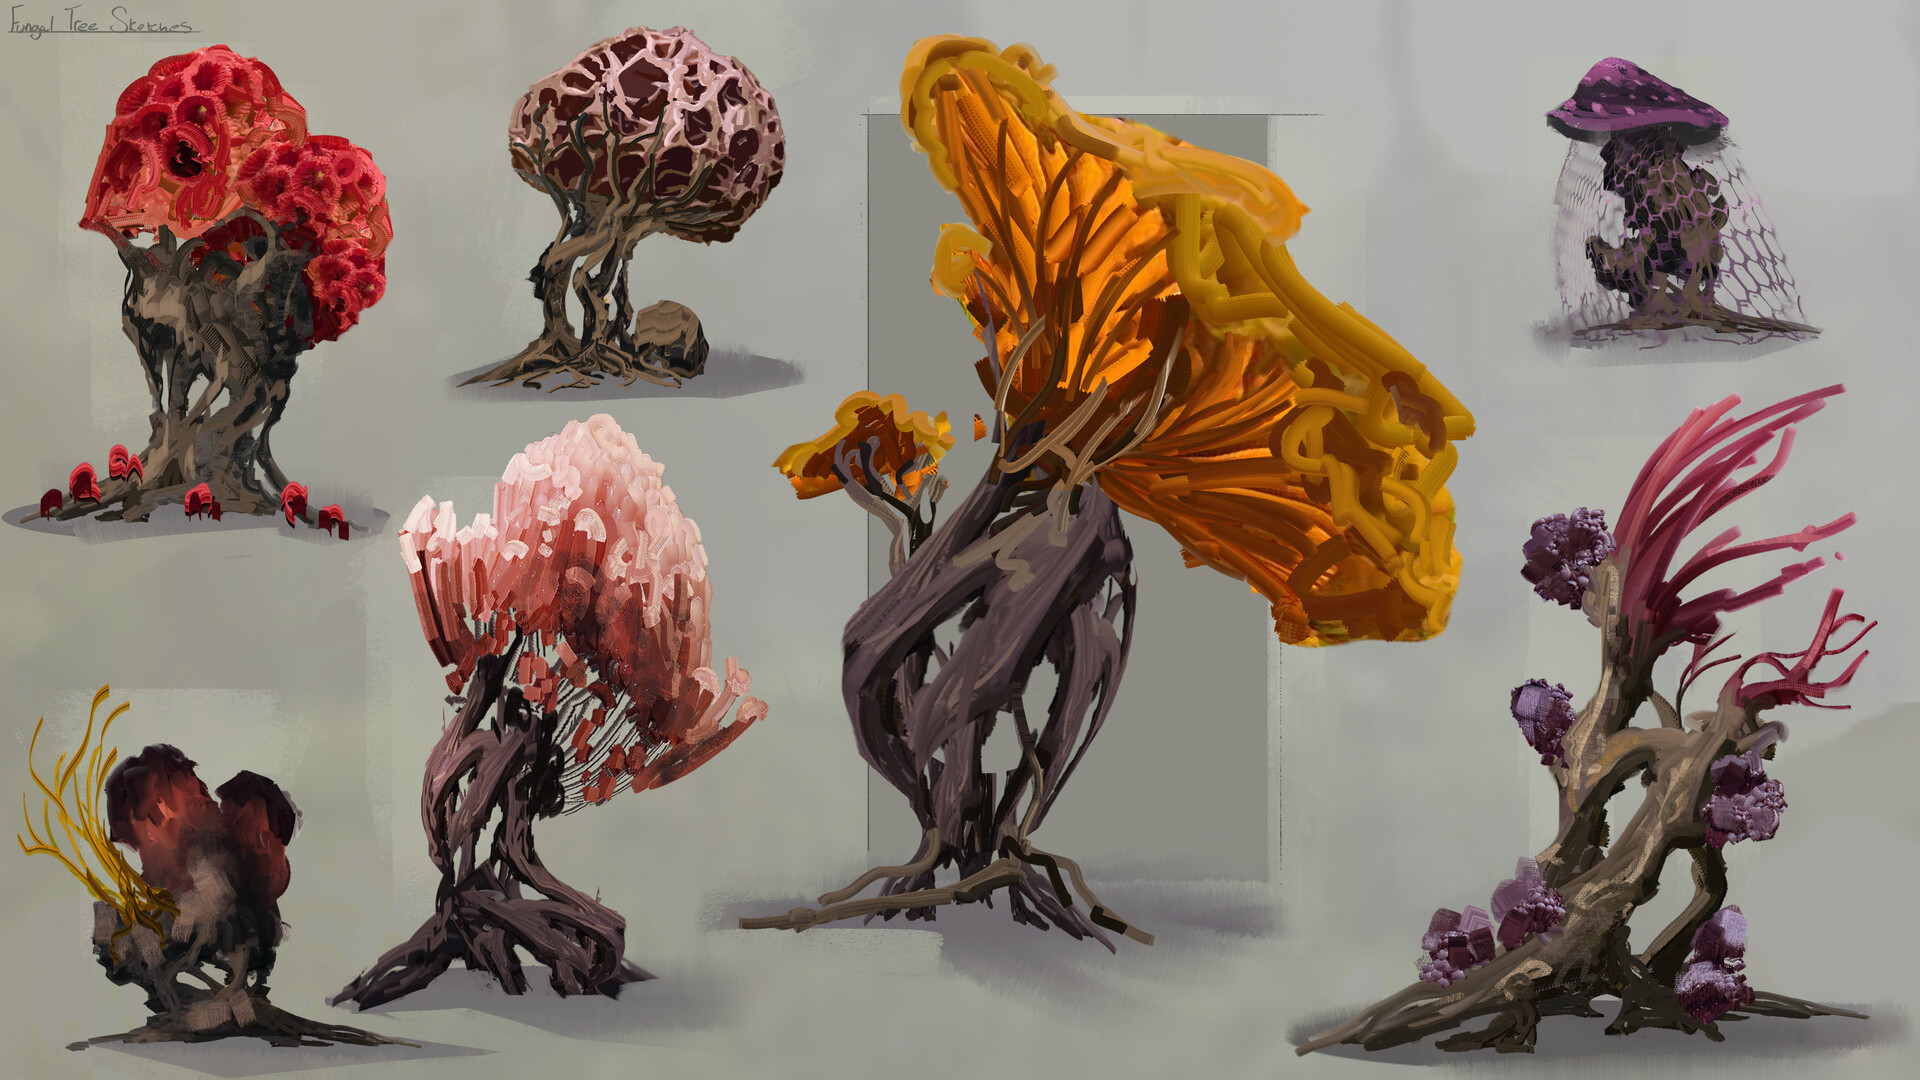 ArtStation - Fungal Tree sketches